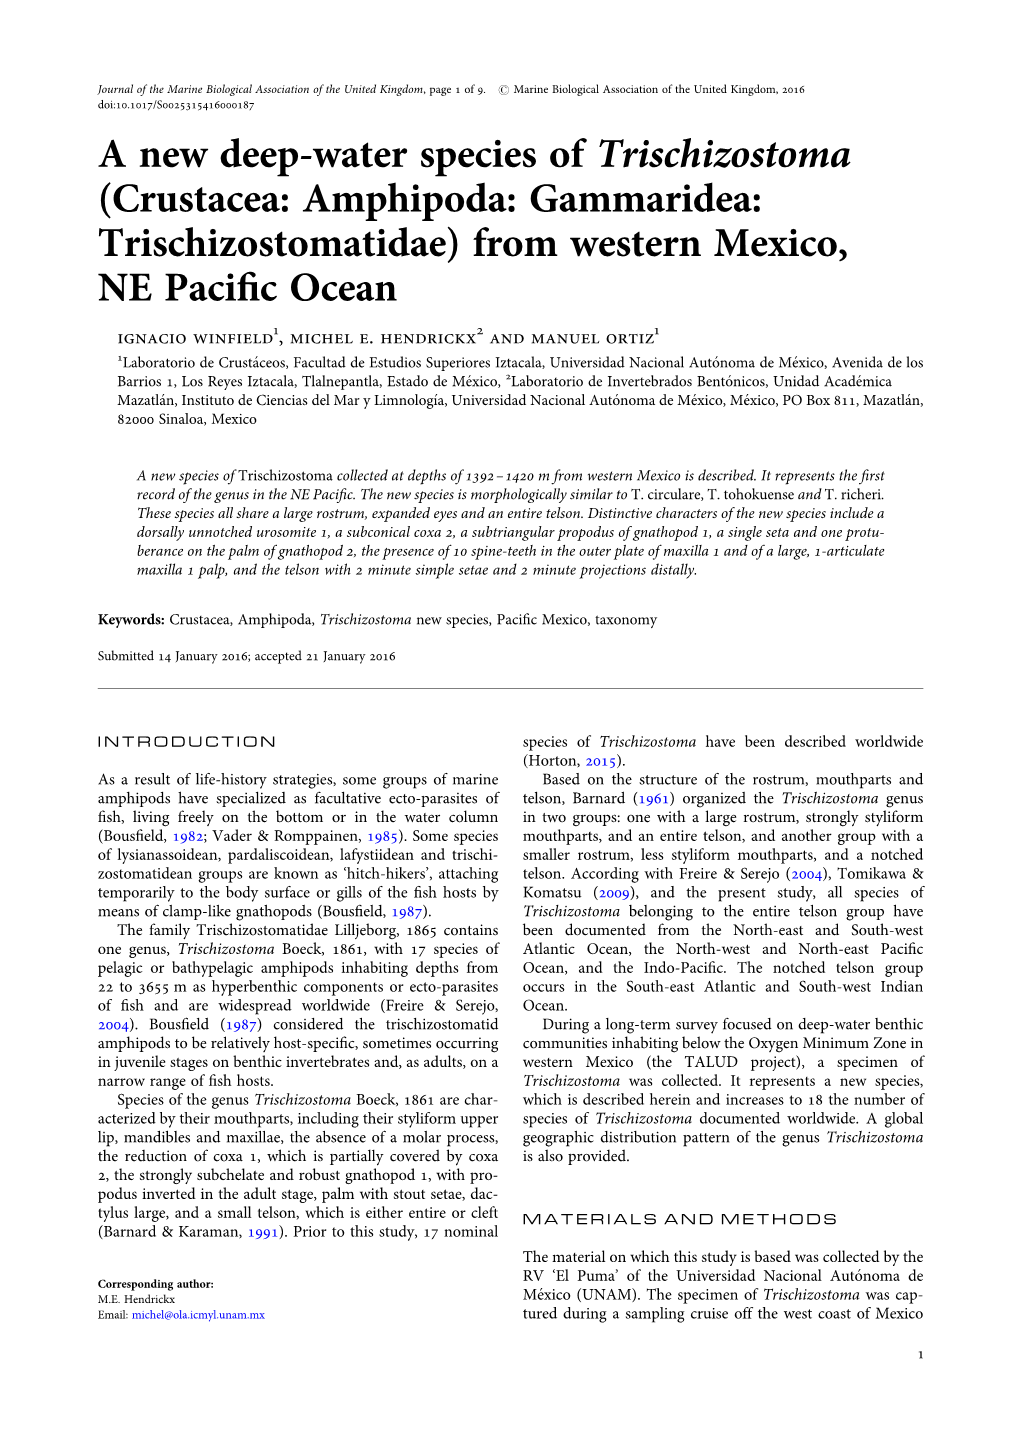 A New Deep-Water Species of Trischizostoma (Crustacea: Amphipoda: Gammaridea: Trischizostomatidae) from Western Mexico, NE Paciﬁc Ocean Ignacio Winfield1, Michel E